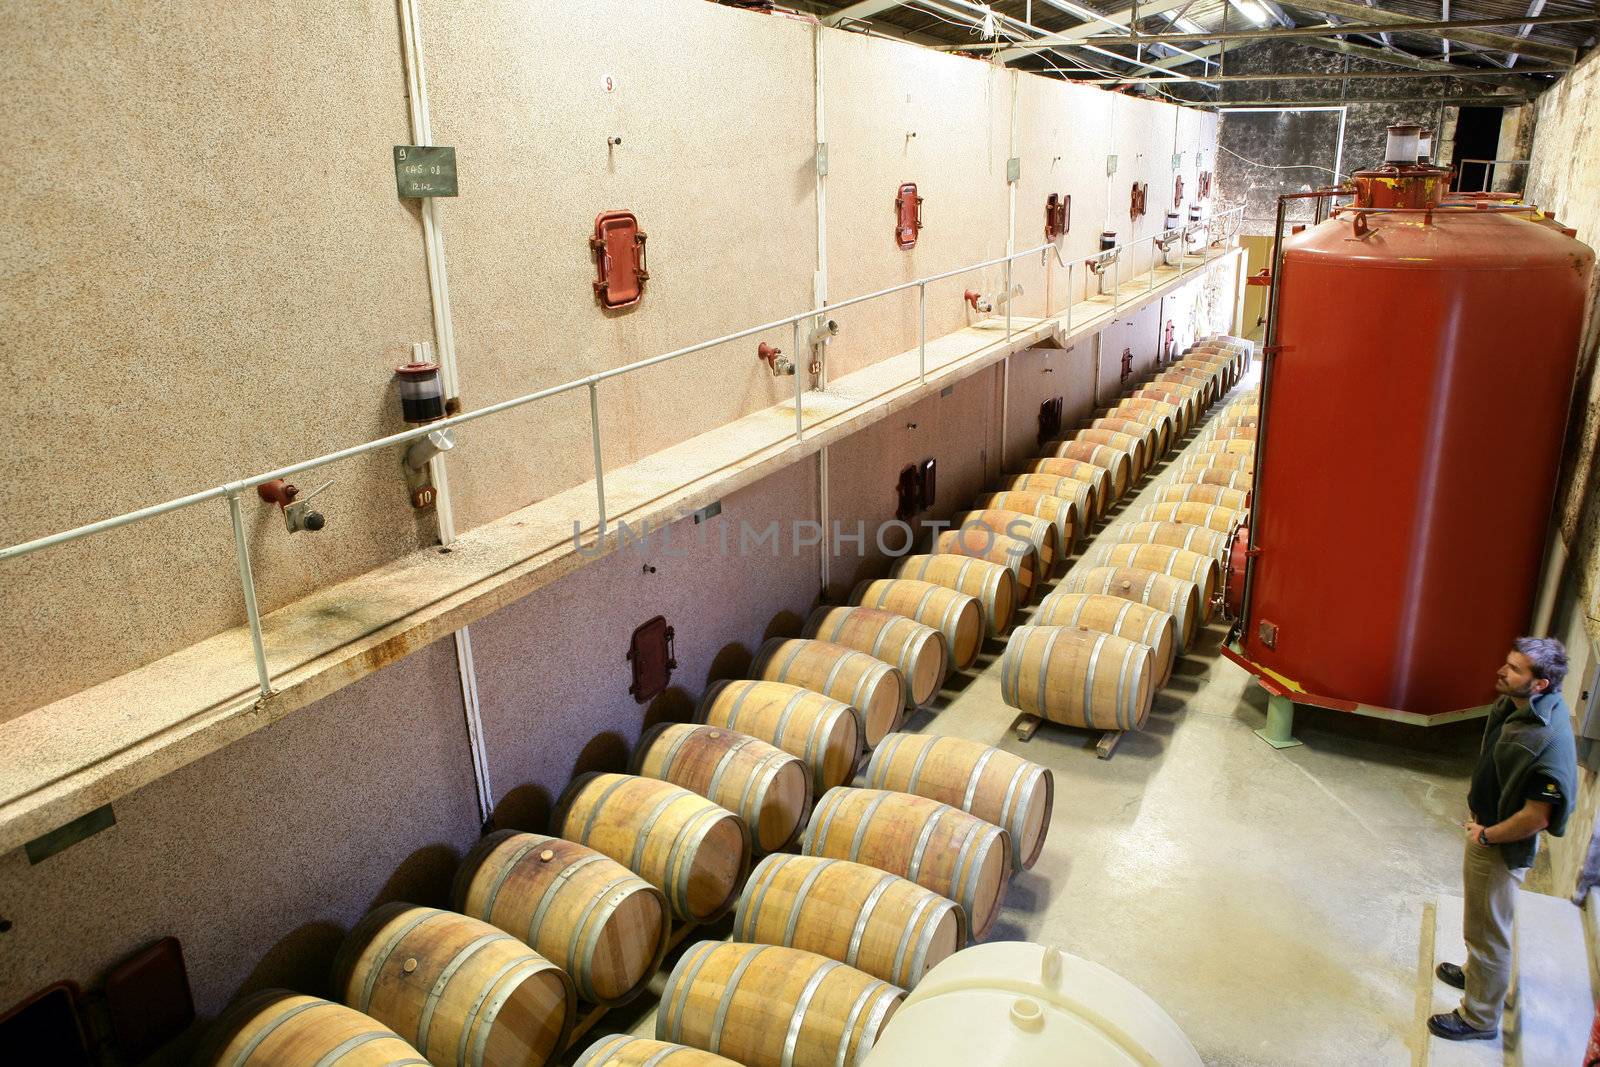 Large barrel storage facility by phovoir